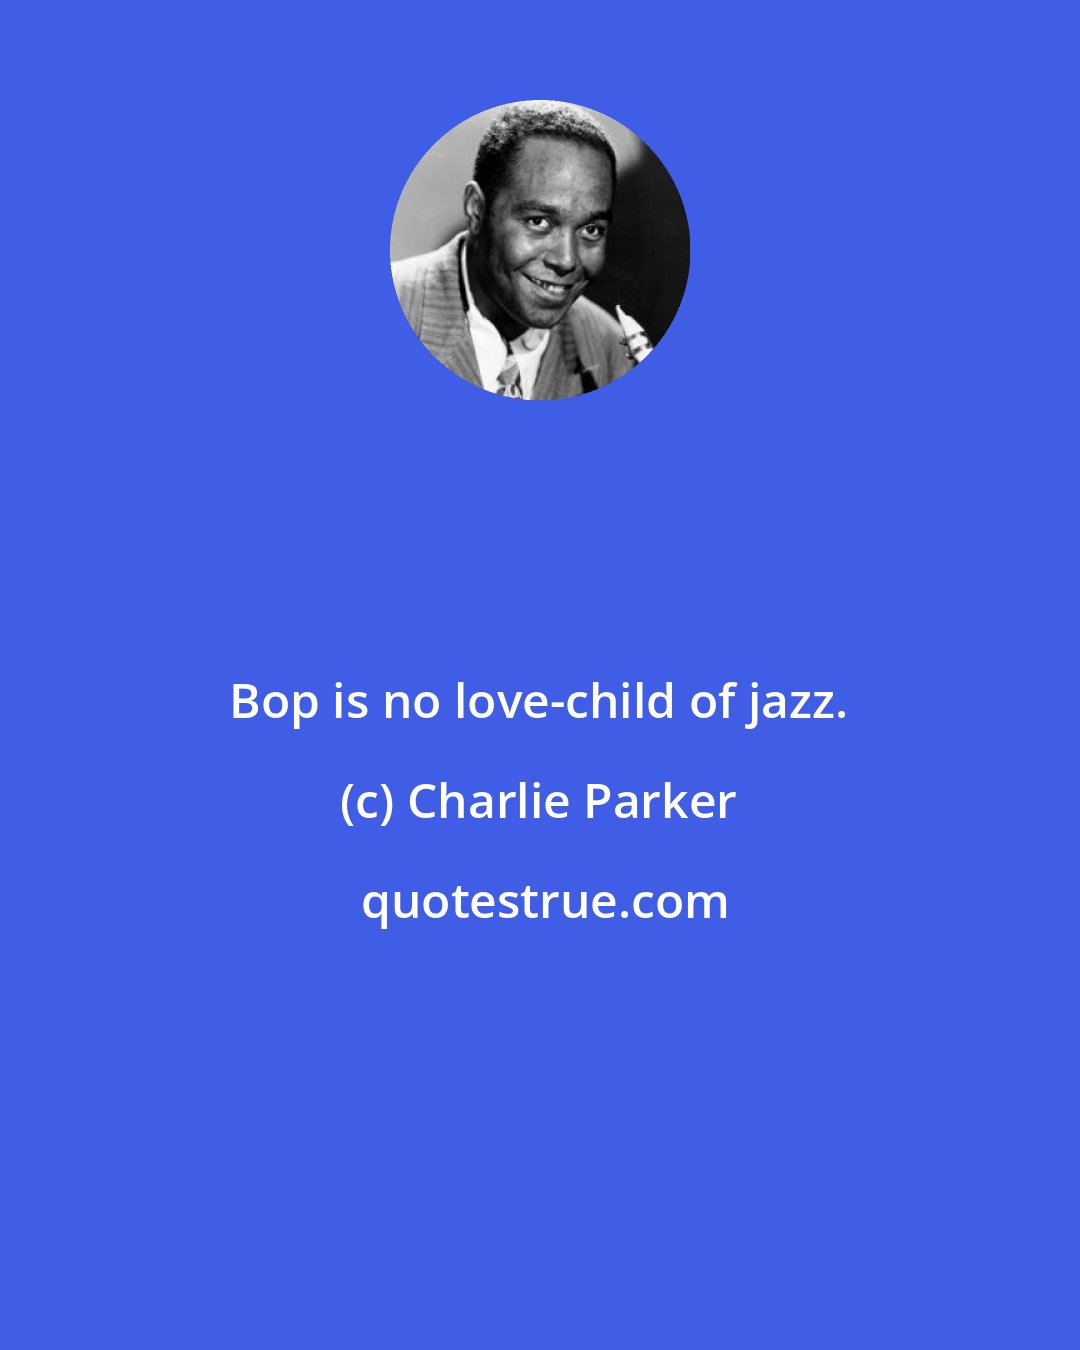 Charlie Parker: Bop is no love-child of jazz.